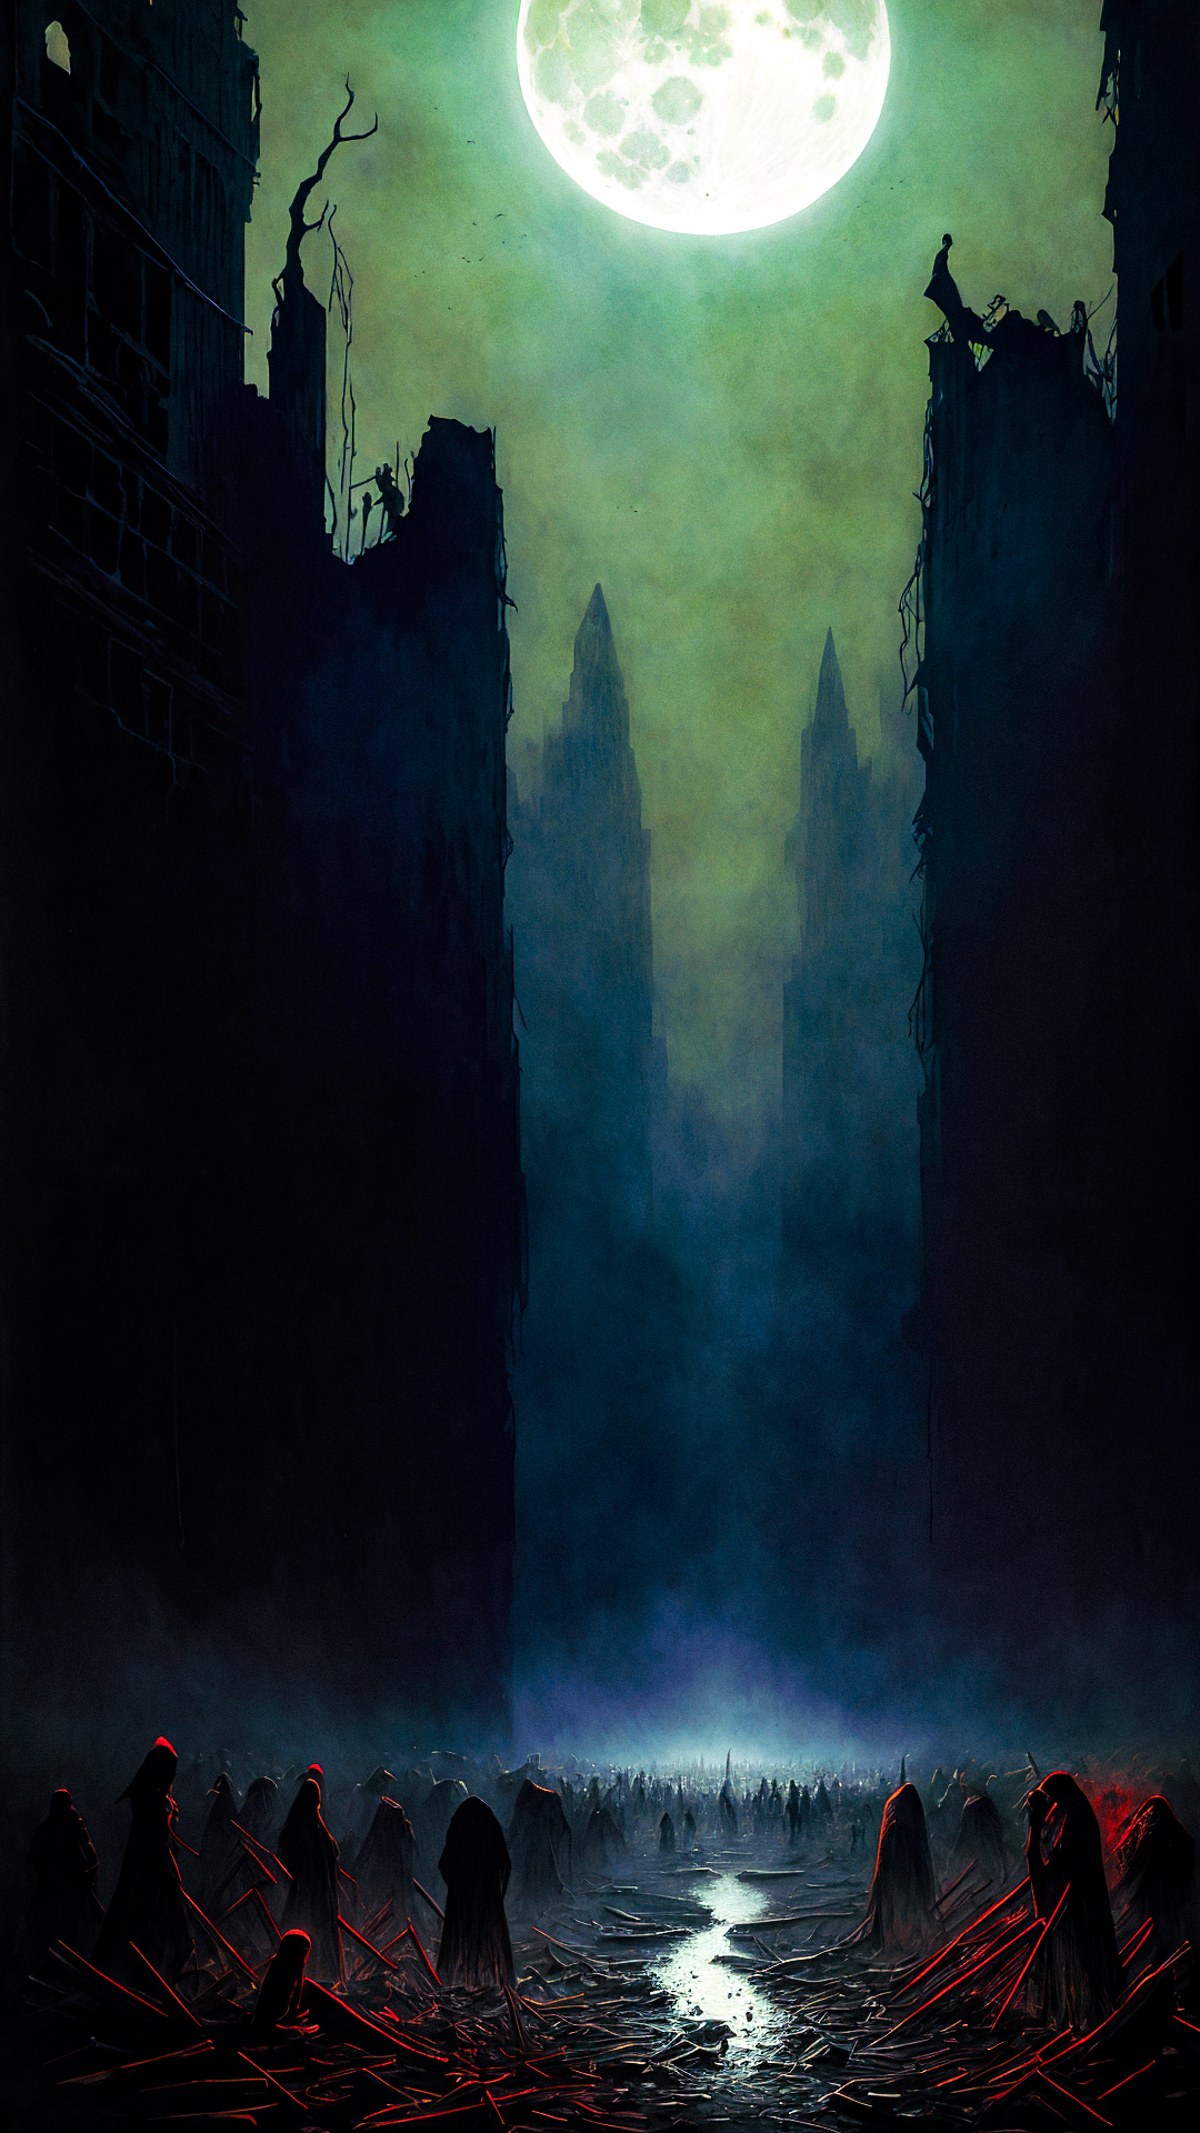 A dark and eerie scene of a narrow alleyway between two large buildings at night